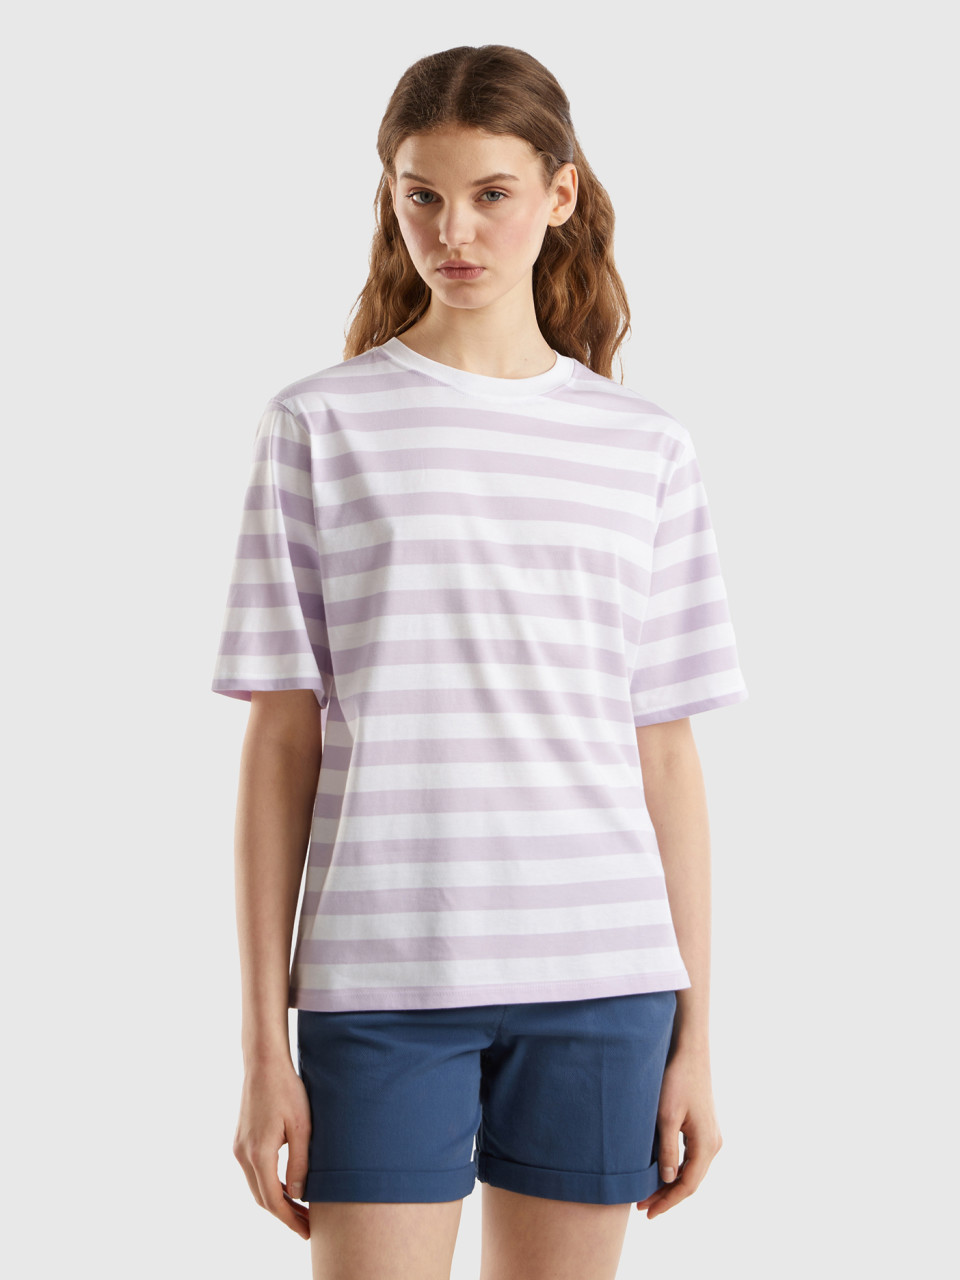 Benetton, Striped Comfort Fit T-shirt, Lilac, Women